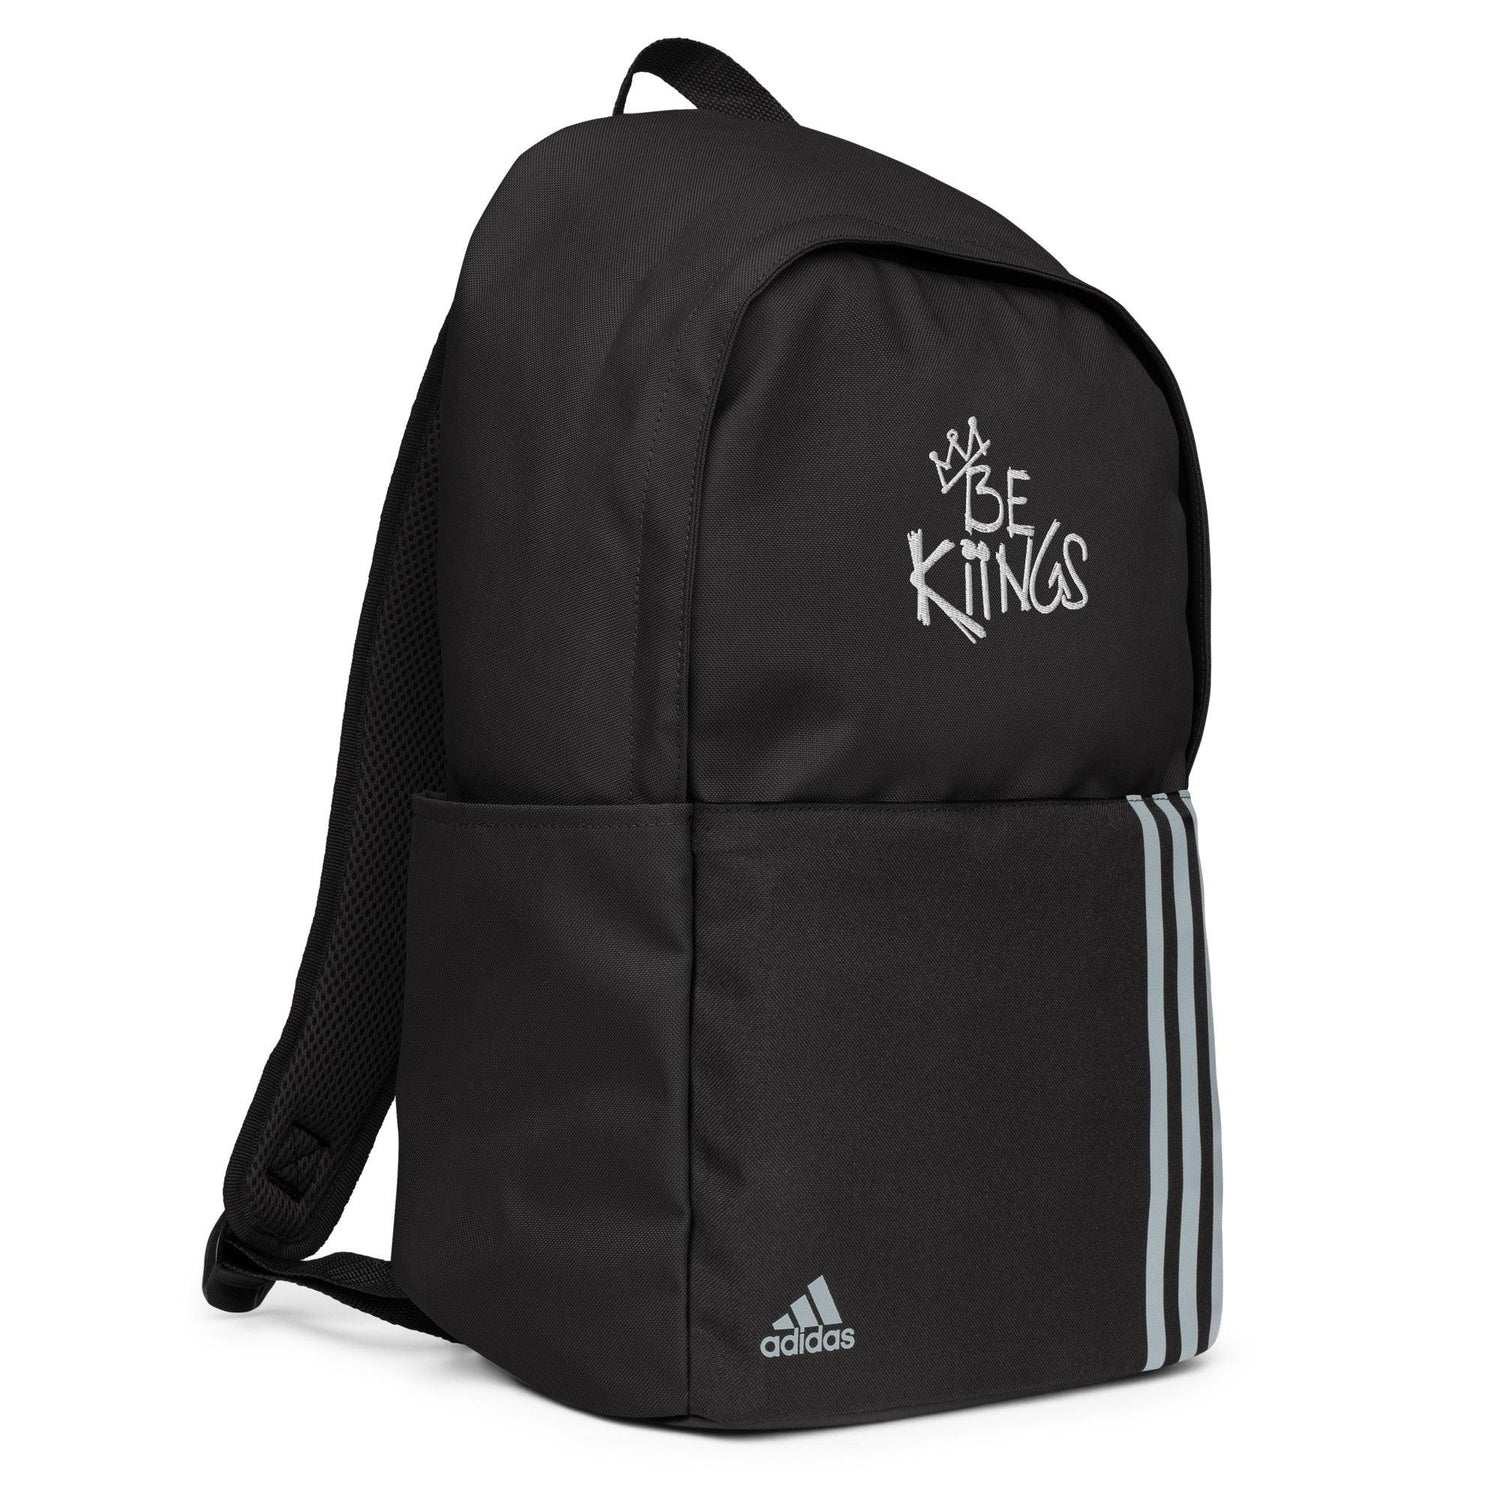 Buddy Howell "Be Kiings" adidas backpack - Fan Arch